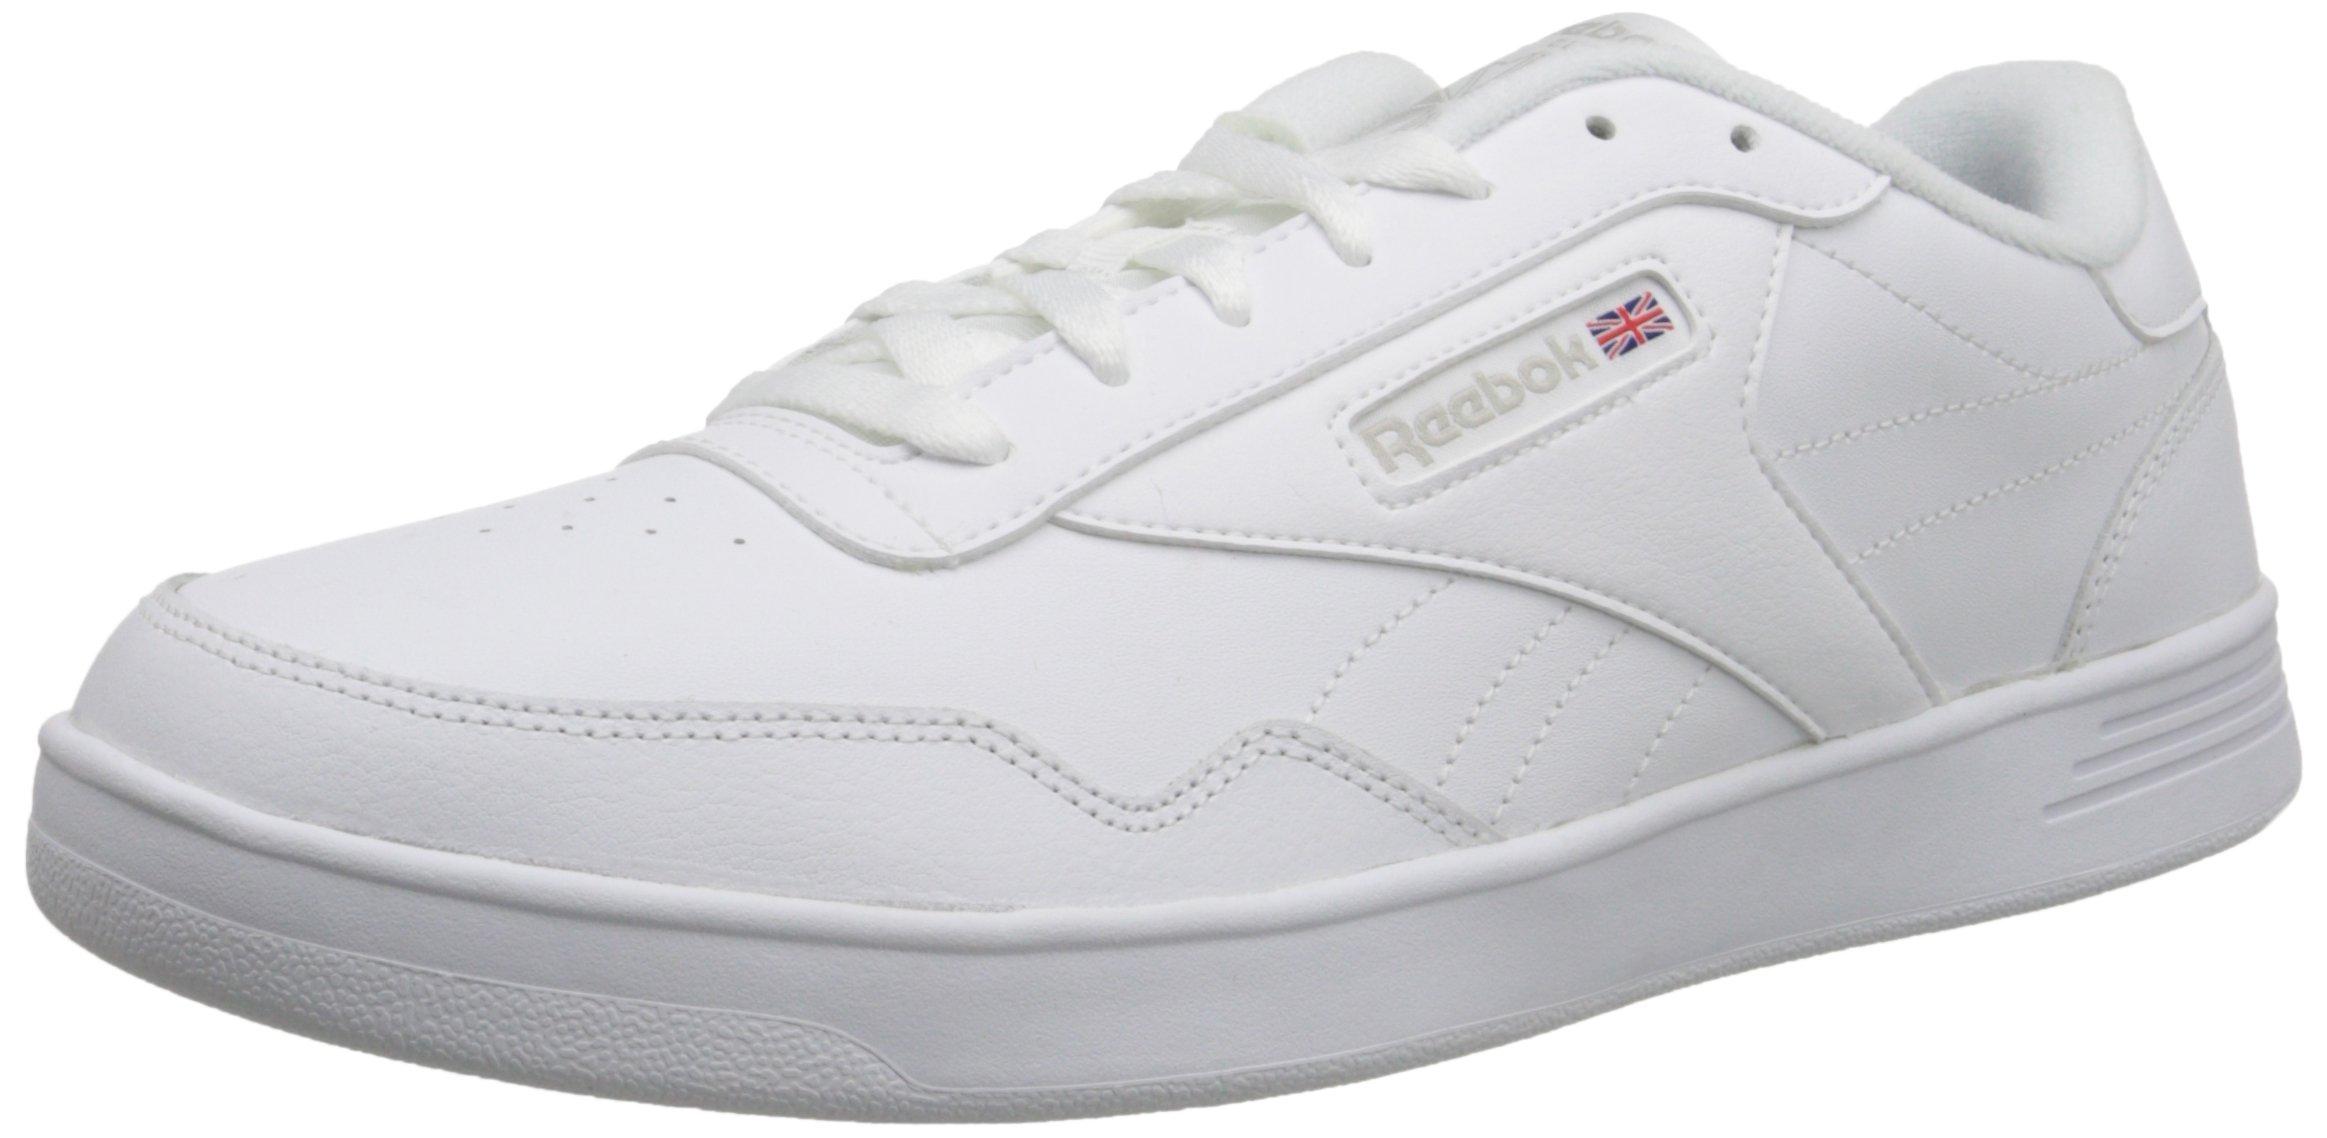 Reebok Club Memt Wide 4e Sneaker in White/Steel (White) for Men - Save ...